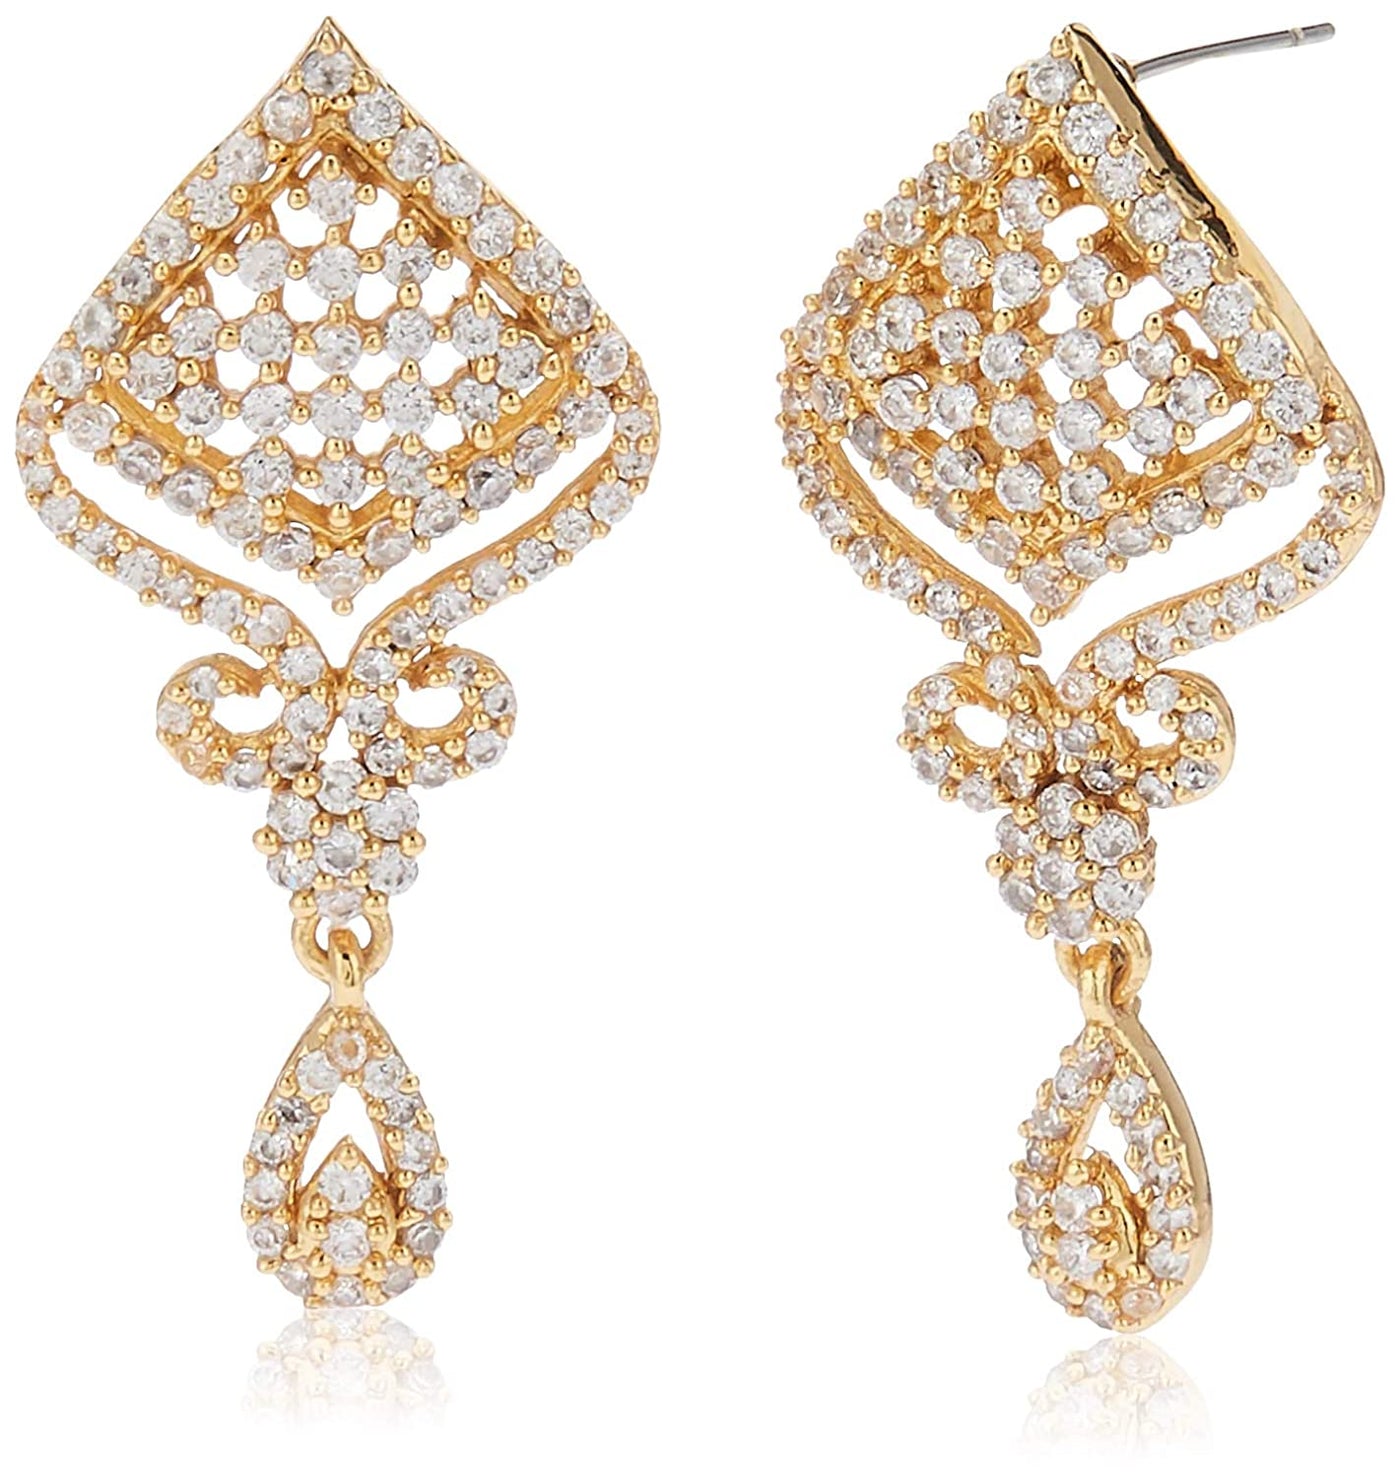 Estele 24 Kt Gold Plated Halo American Diamond Necklace Set for Women